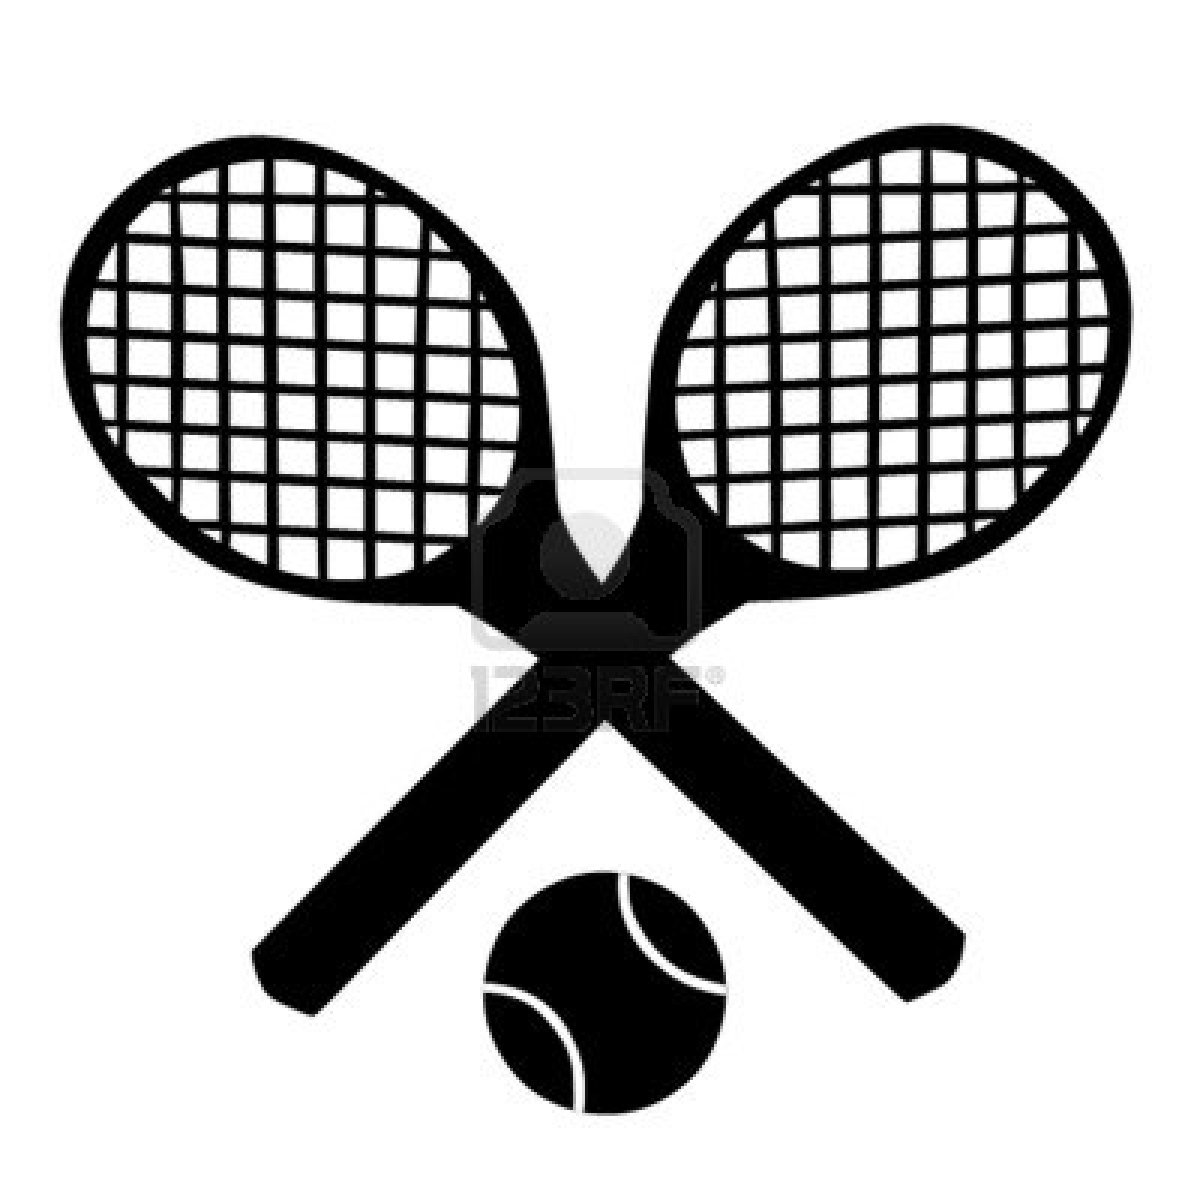 Tennis racket clip art - ClipartFest